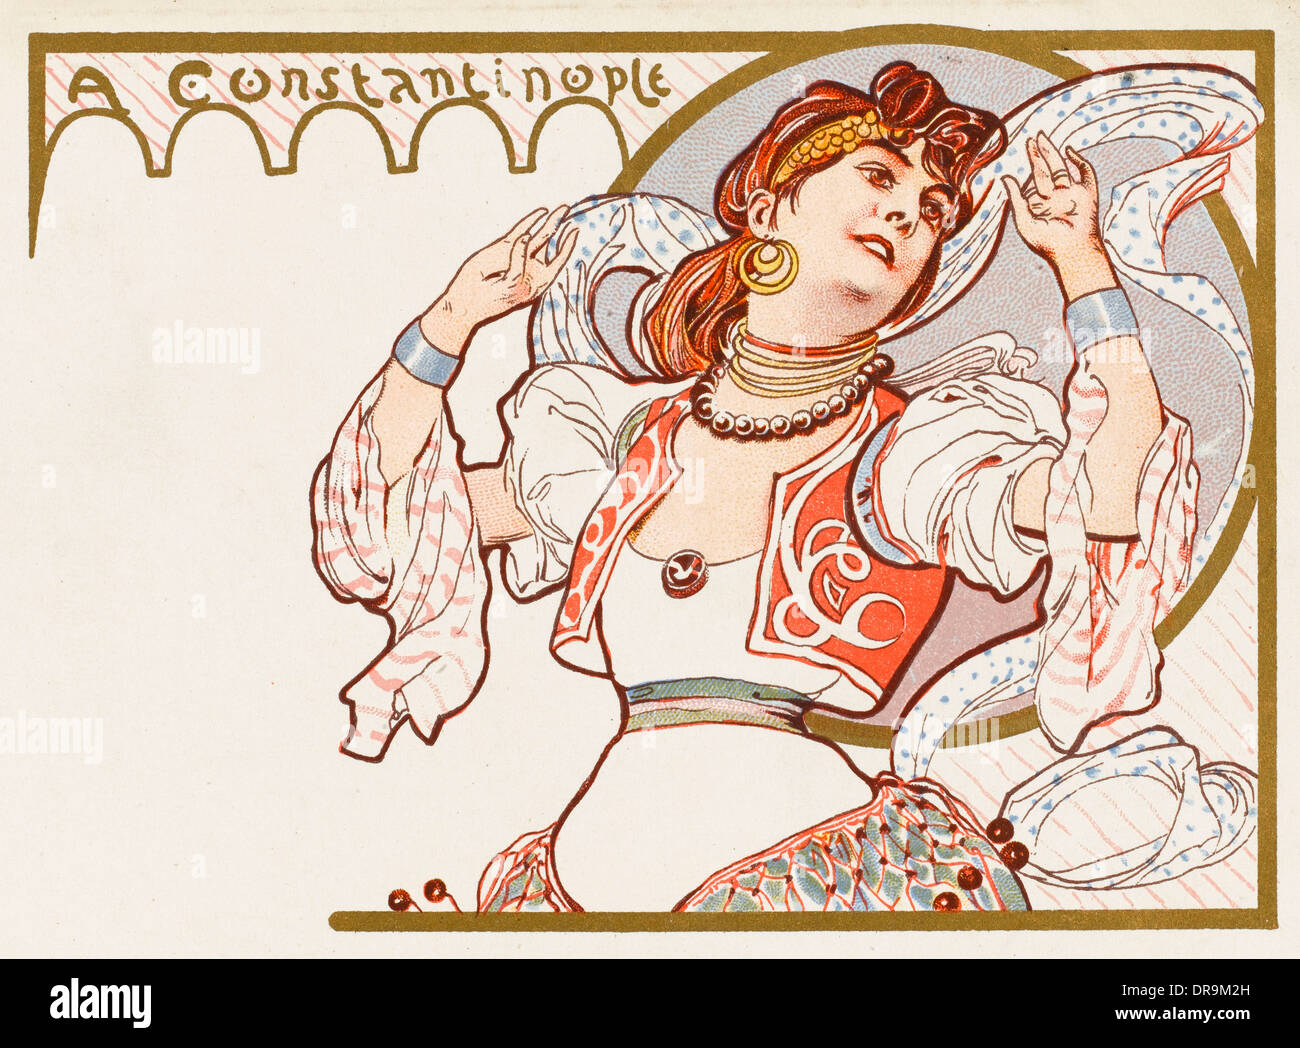 A Costantinopoli fantasy lady harem Foto Stock